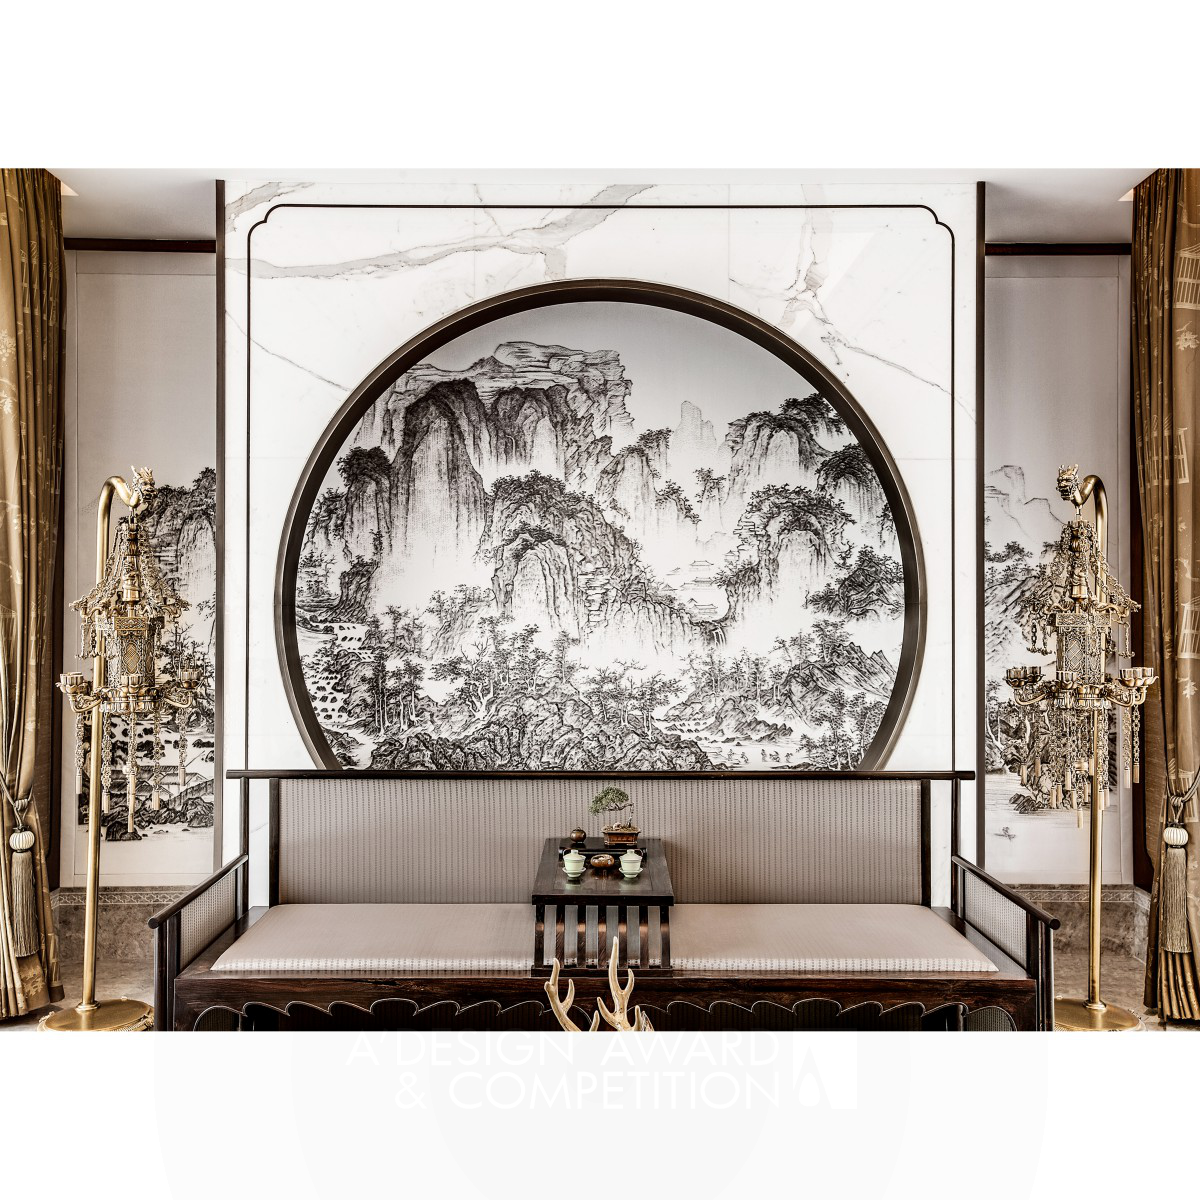 David Chang Design Associates Intl Luxury Show Villa